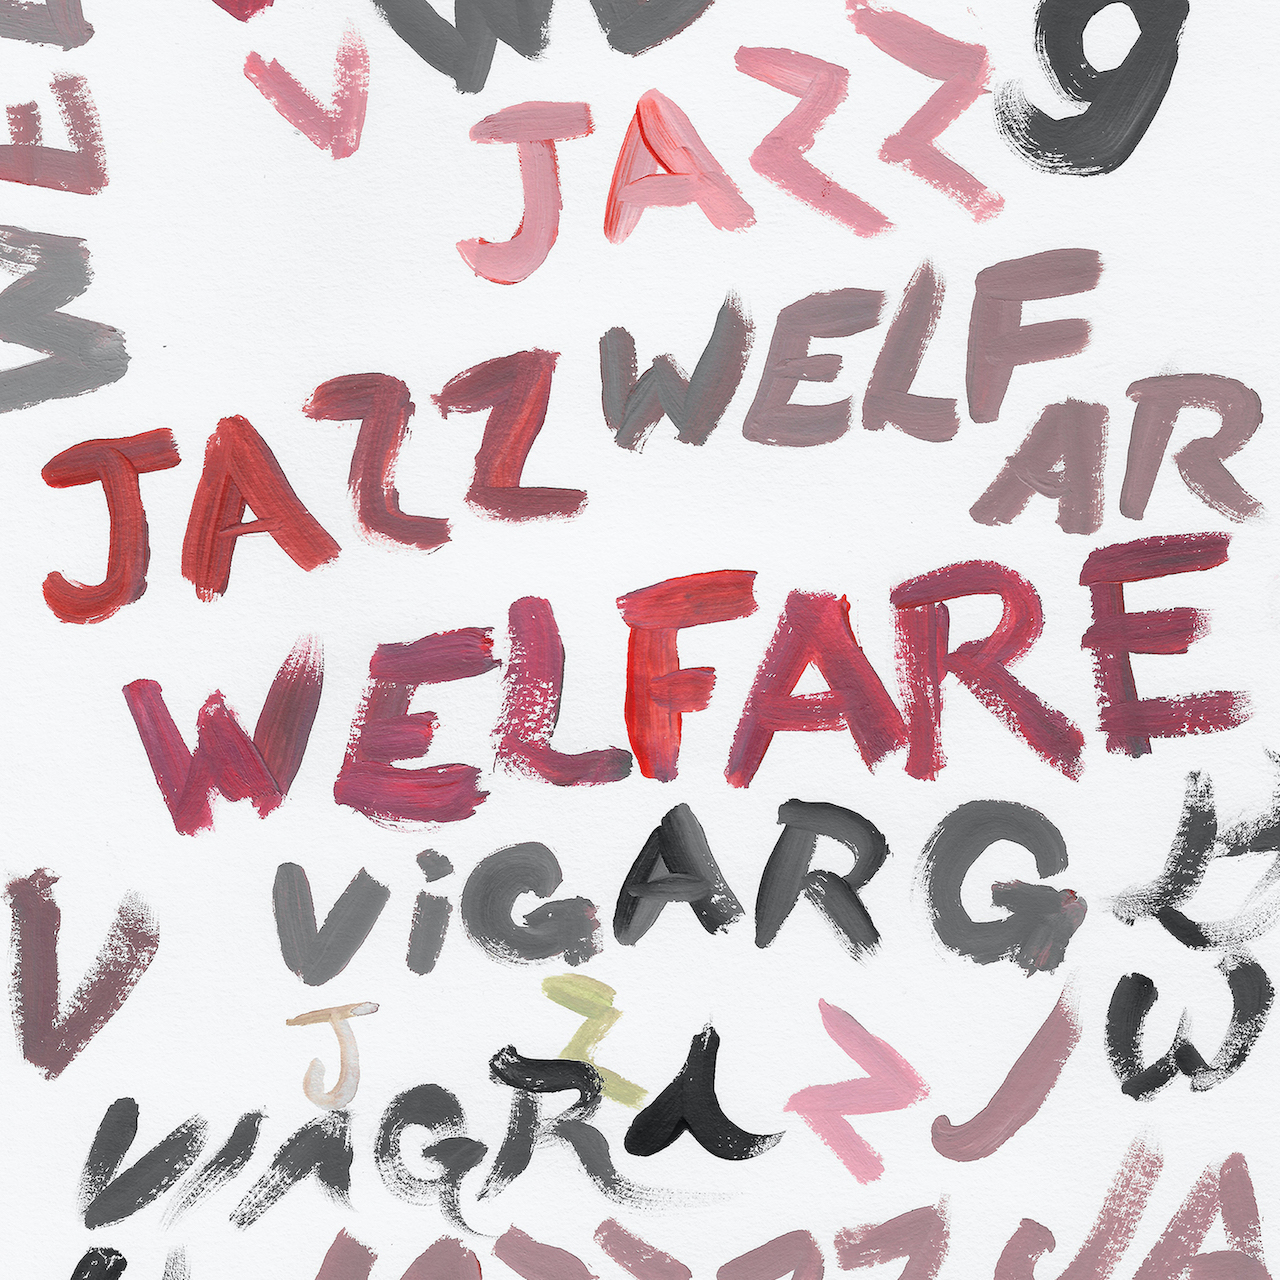 Viagra Boys - Welfare Jazz